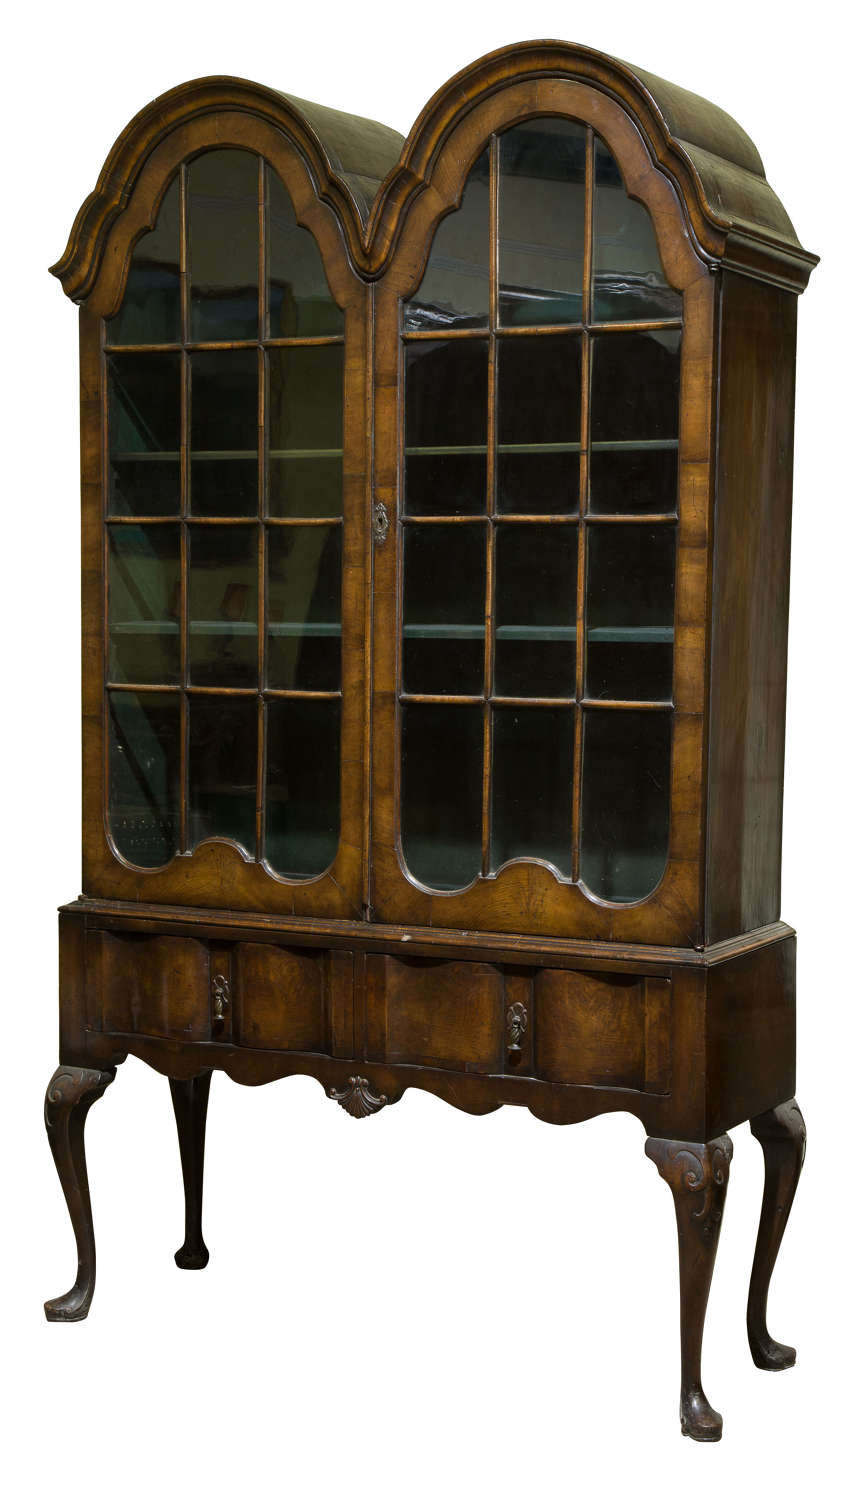 Queen Anne style walnut double-domed glazed cabinet